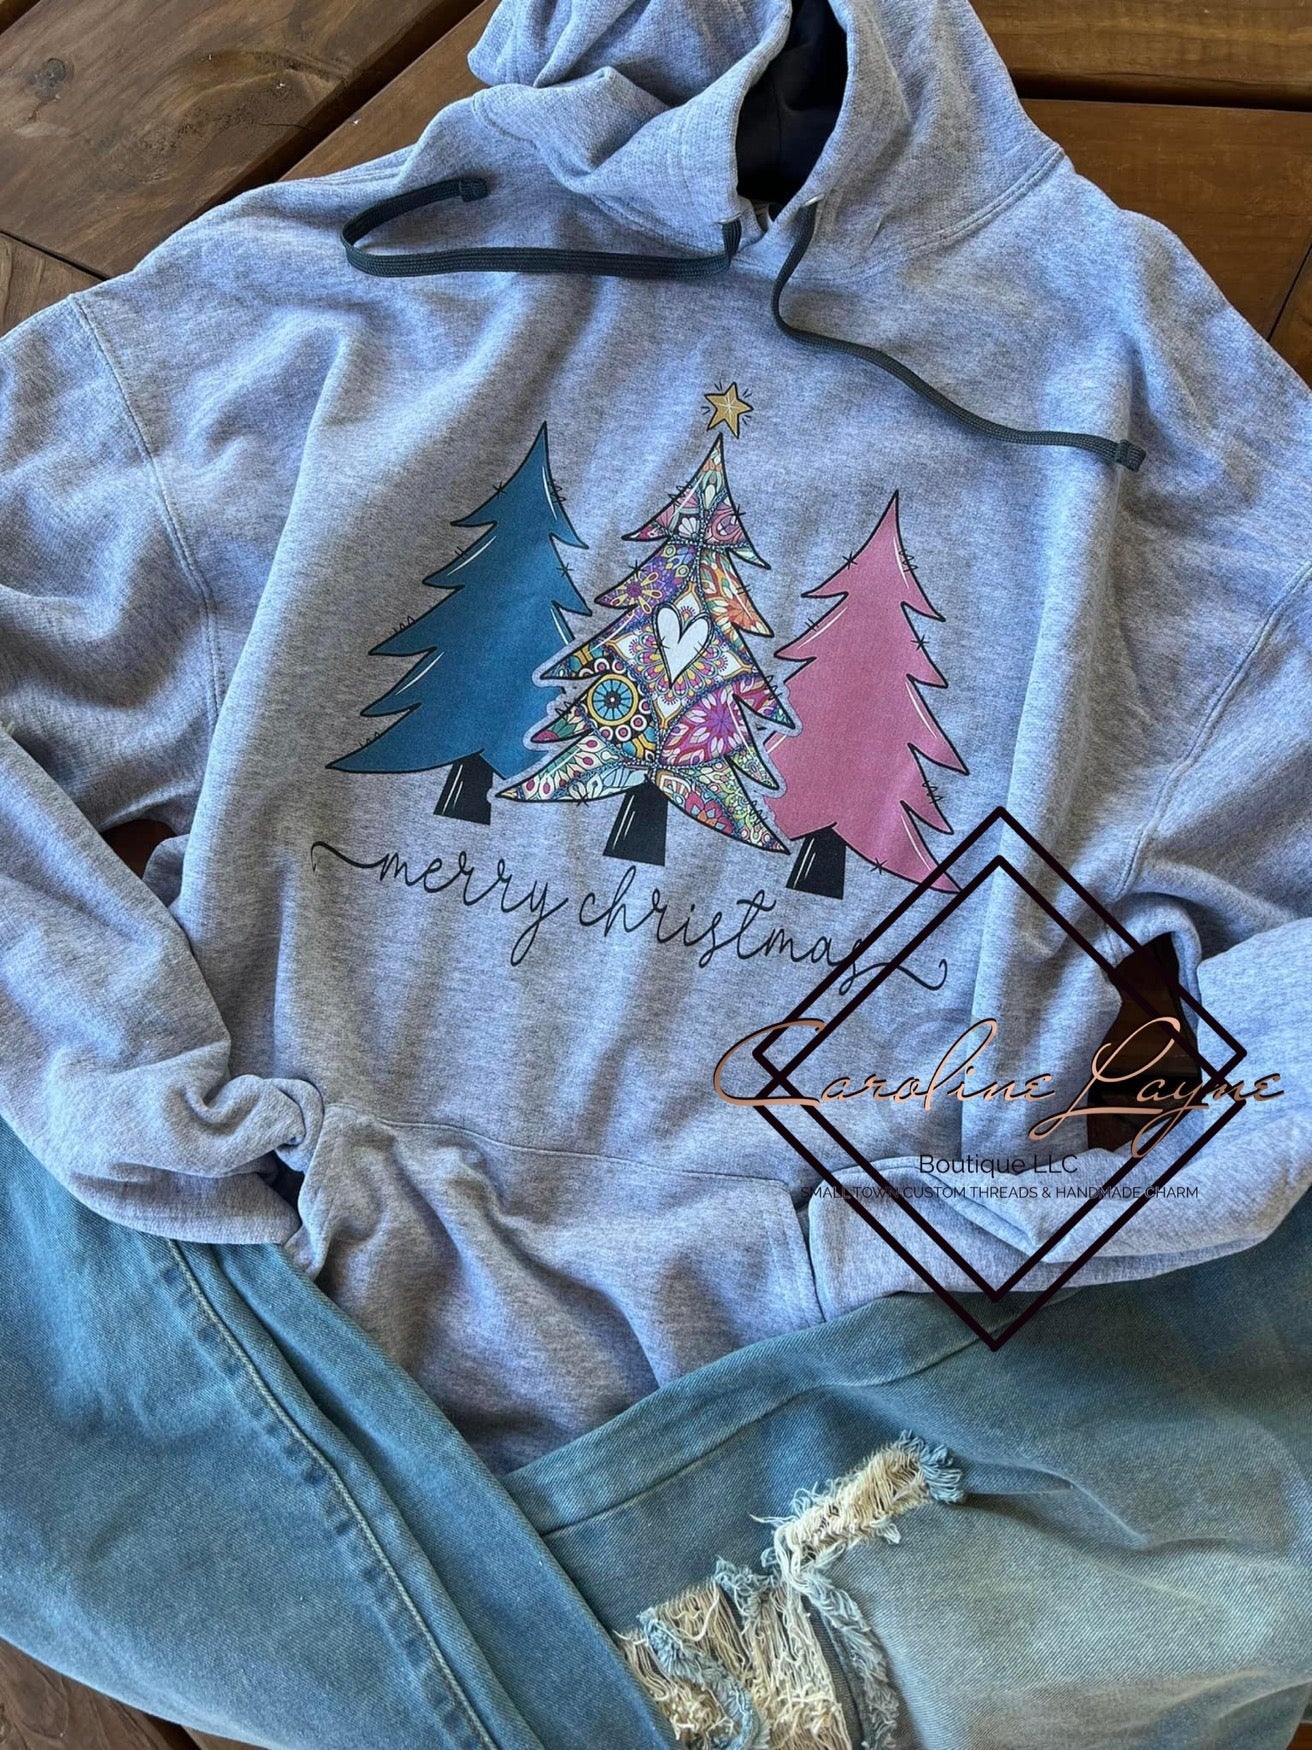 Merry Christmas trees Hoodie - Caroline Layne Boutique LLC